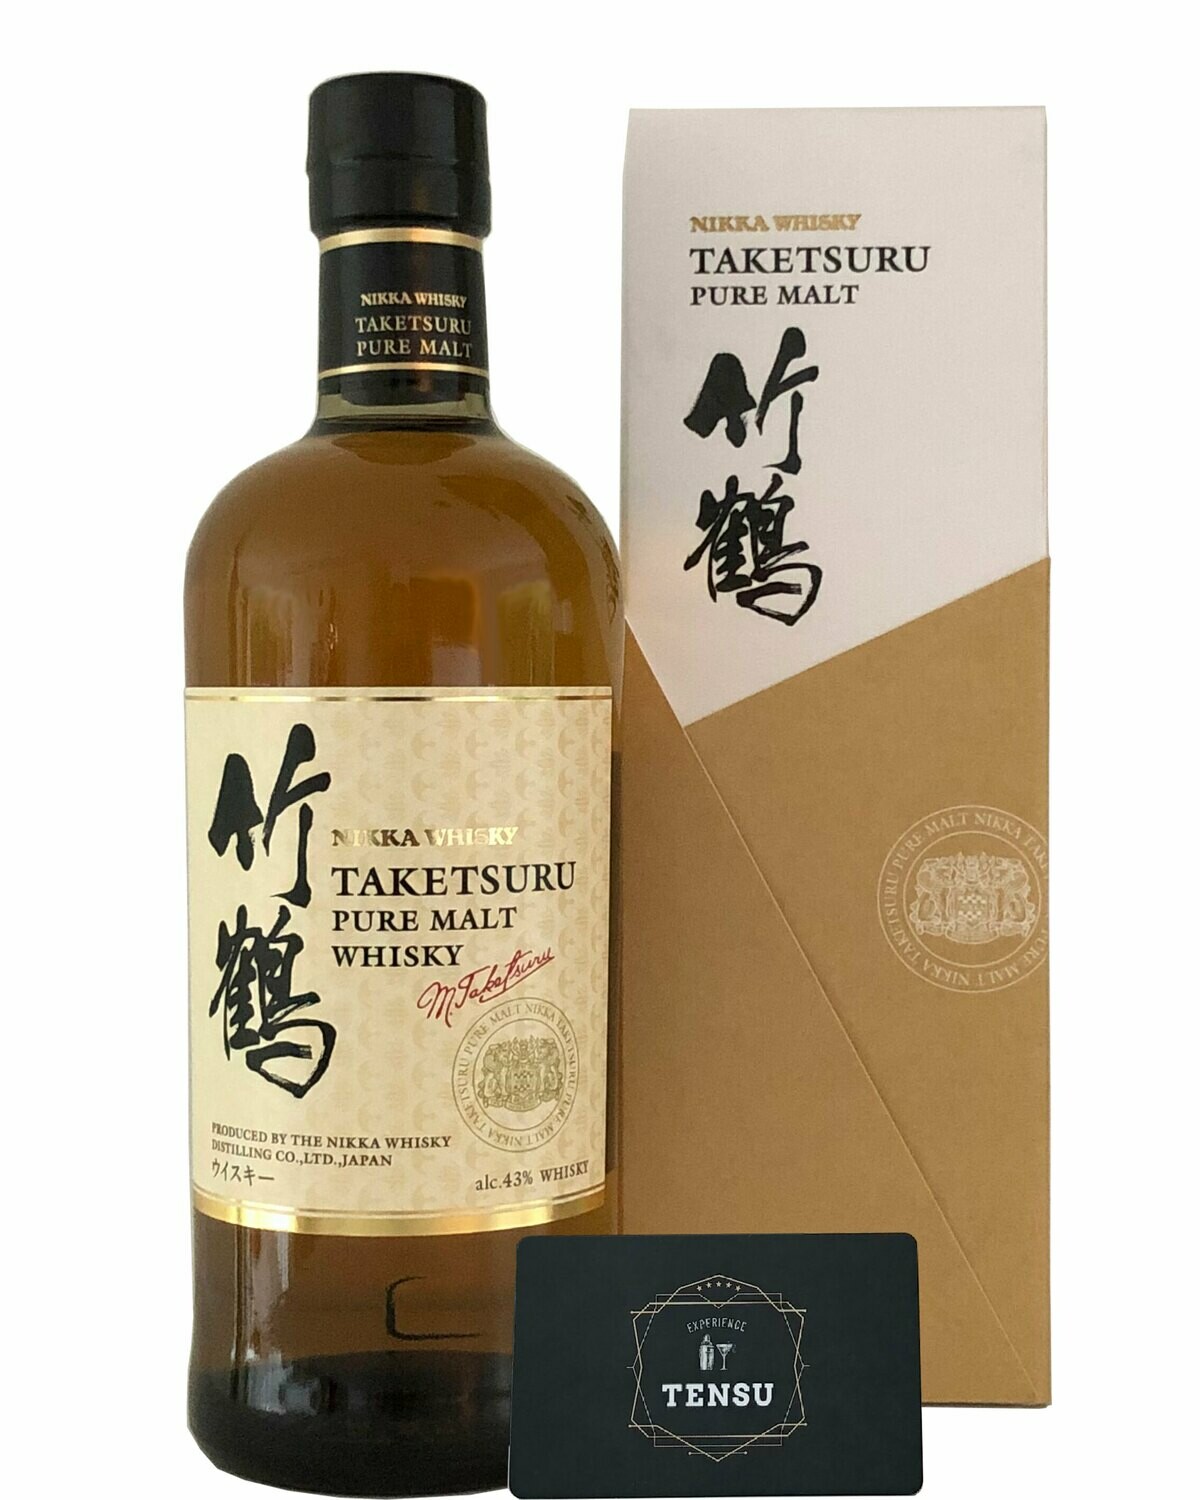 Taketsuru Pure Malt Whisky "Nikka"